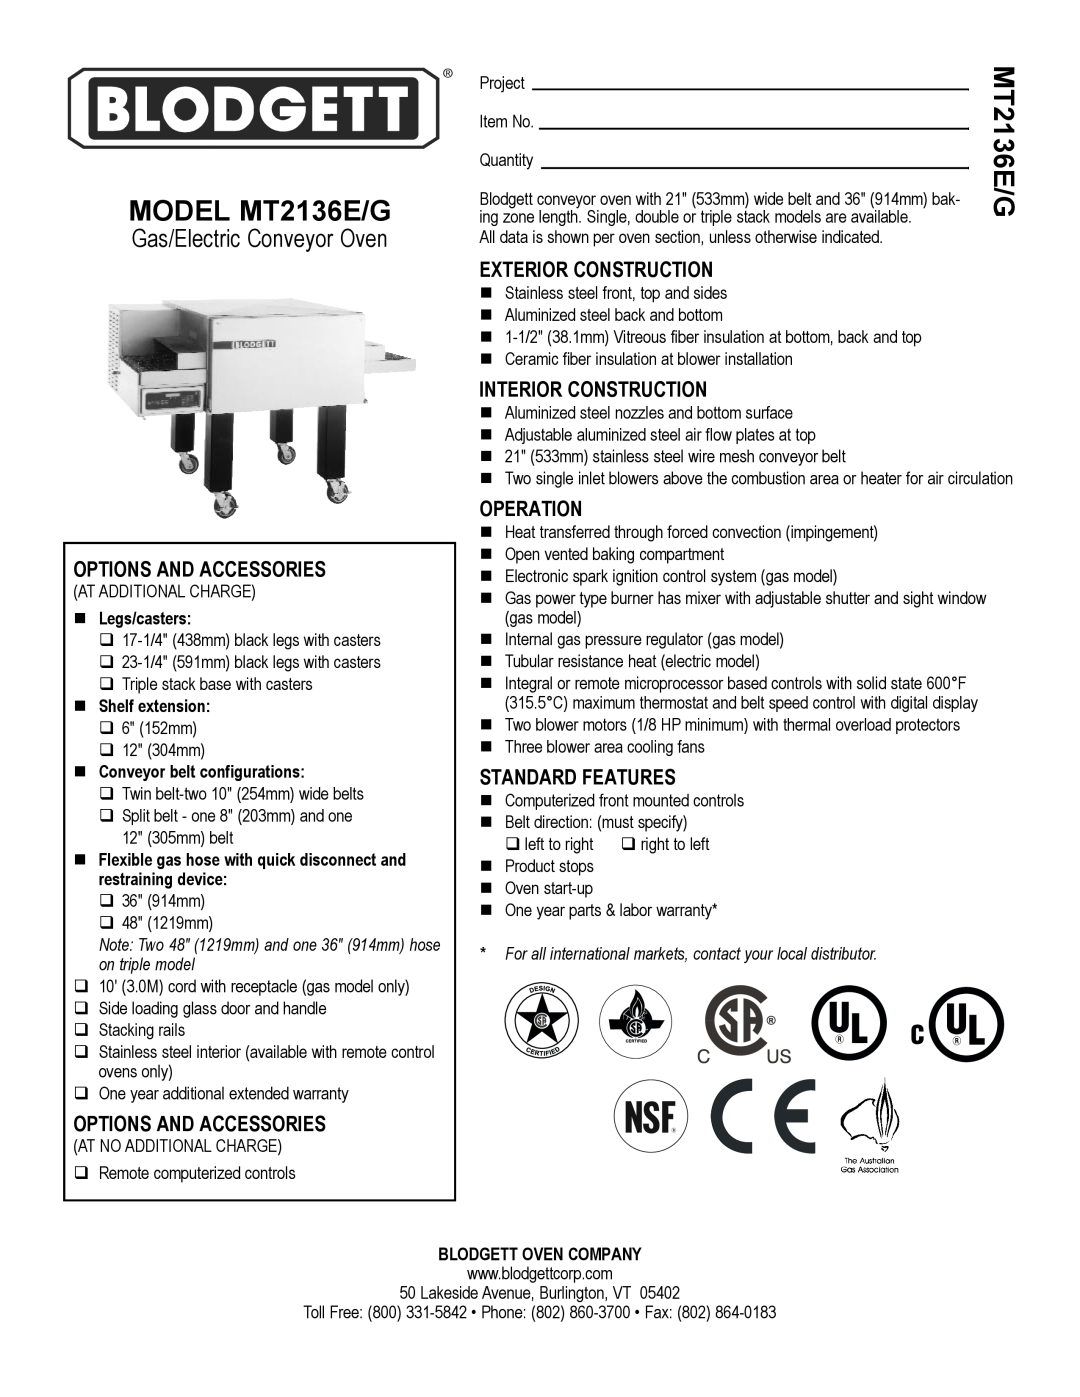 Blodgett warranty MODEL MT2136E/G, Exterior Construction, Interior Construction, Operation, Options And Accessories 